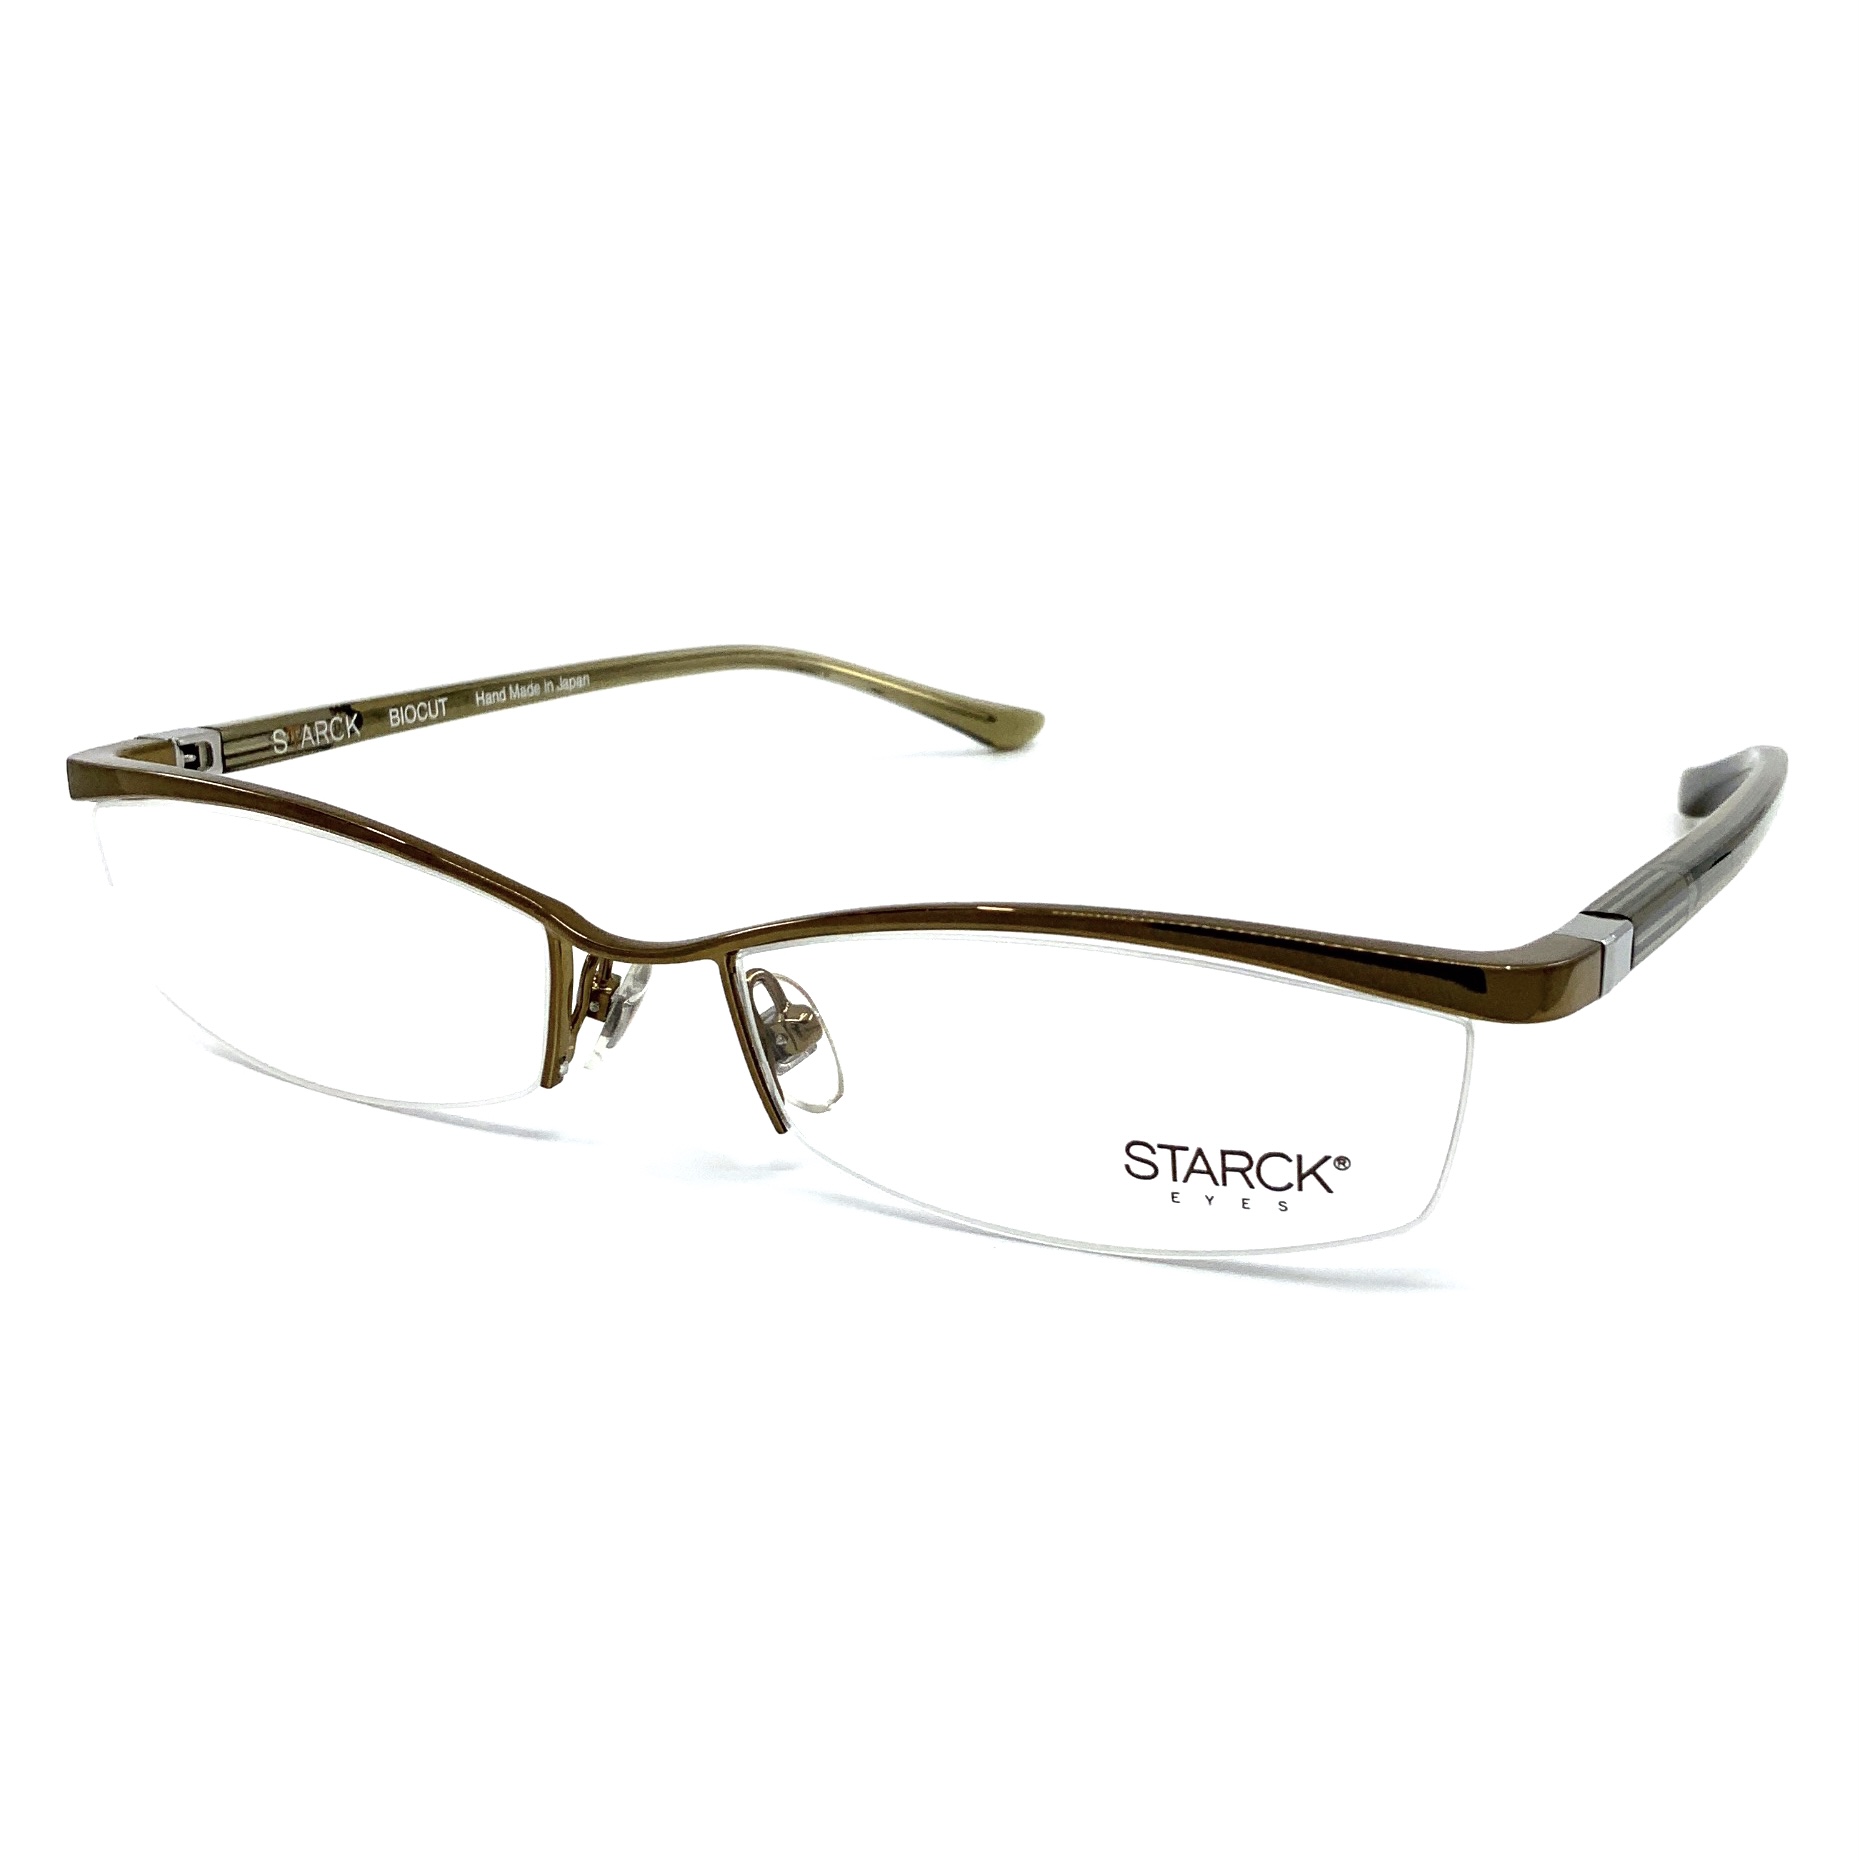 STARCK EYES スタルクアイズ メガネ SH0001J 0606S 56サイズ〔ミクリジャポン期〕日本製 (在庫なし)